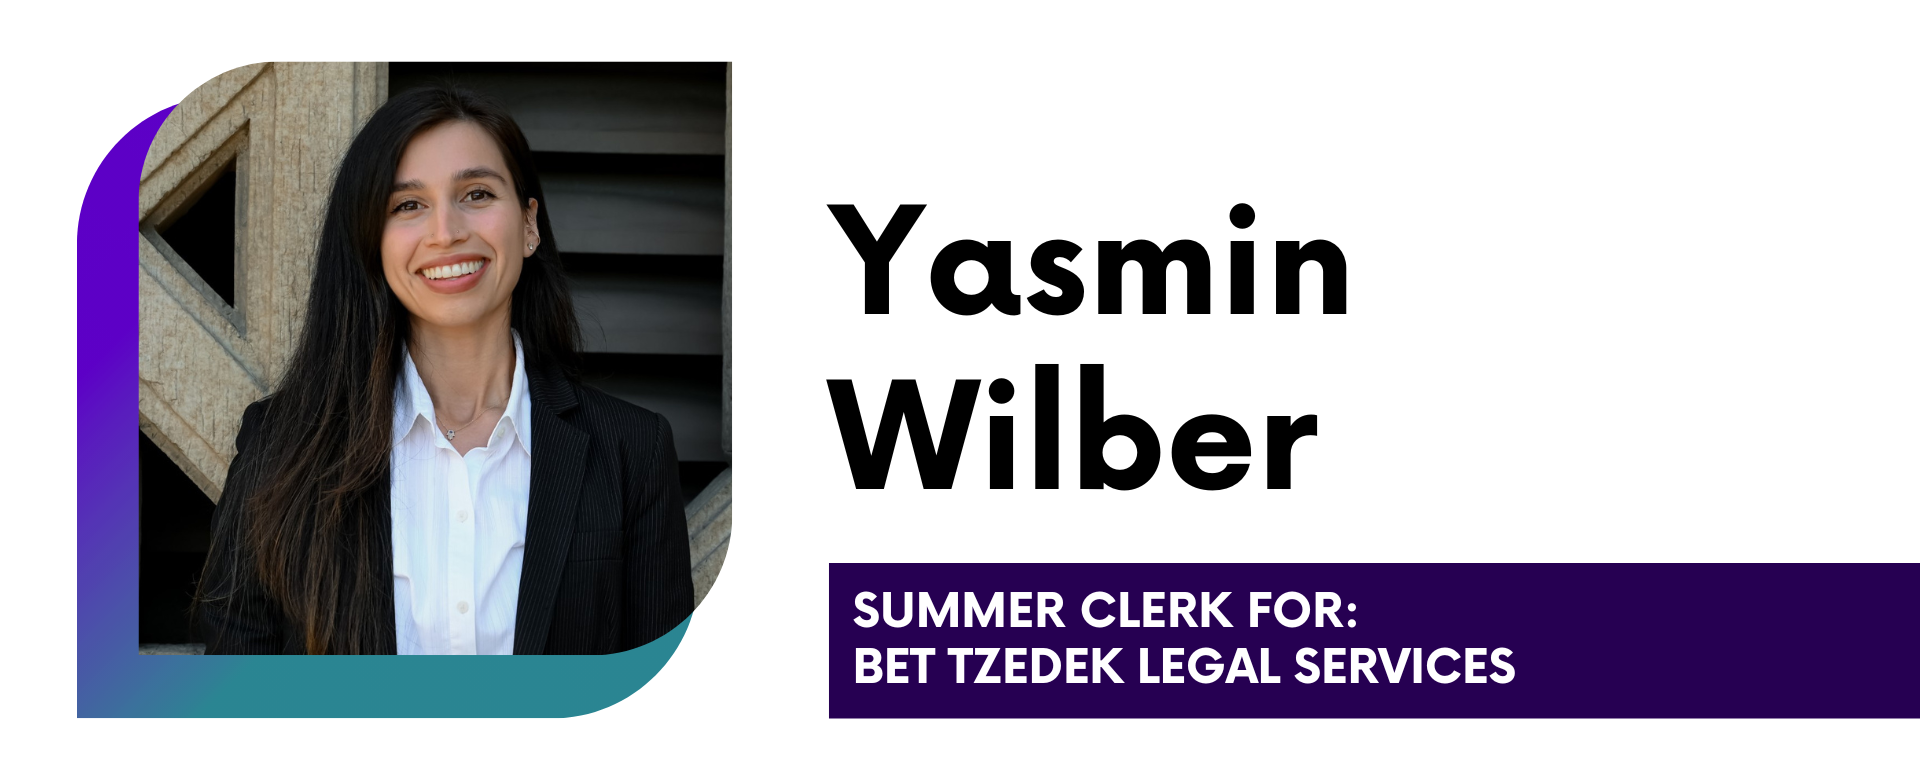 Yasmin Wilber Summer Clerk for Bet Tzedek Legal Services